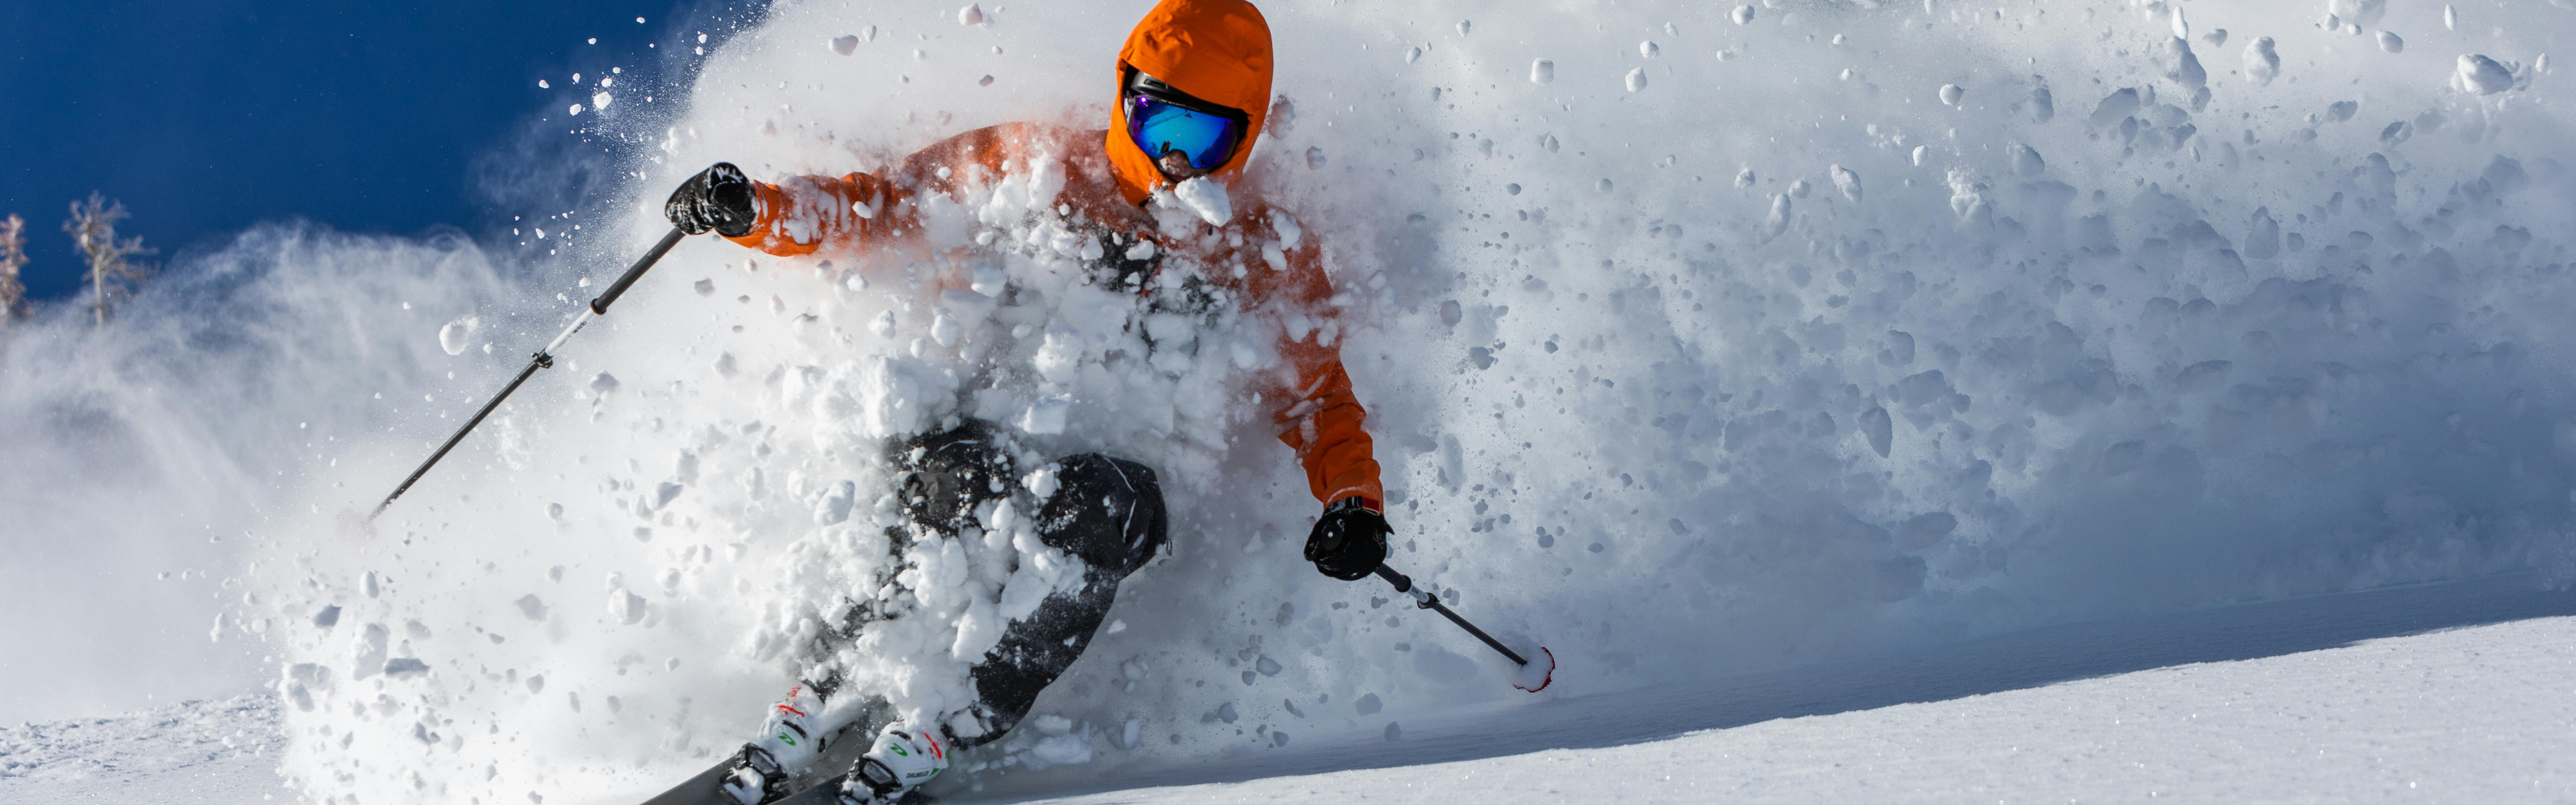 Pro skier Dash Longe makes a turn through a wave of powdery snow. 